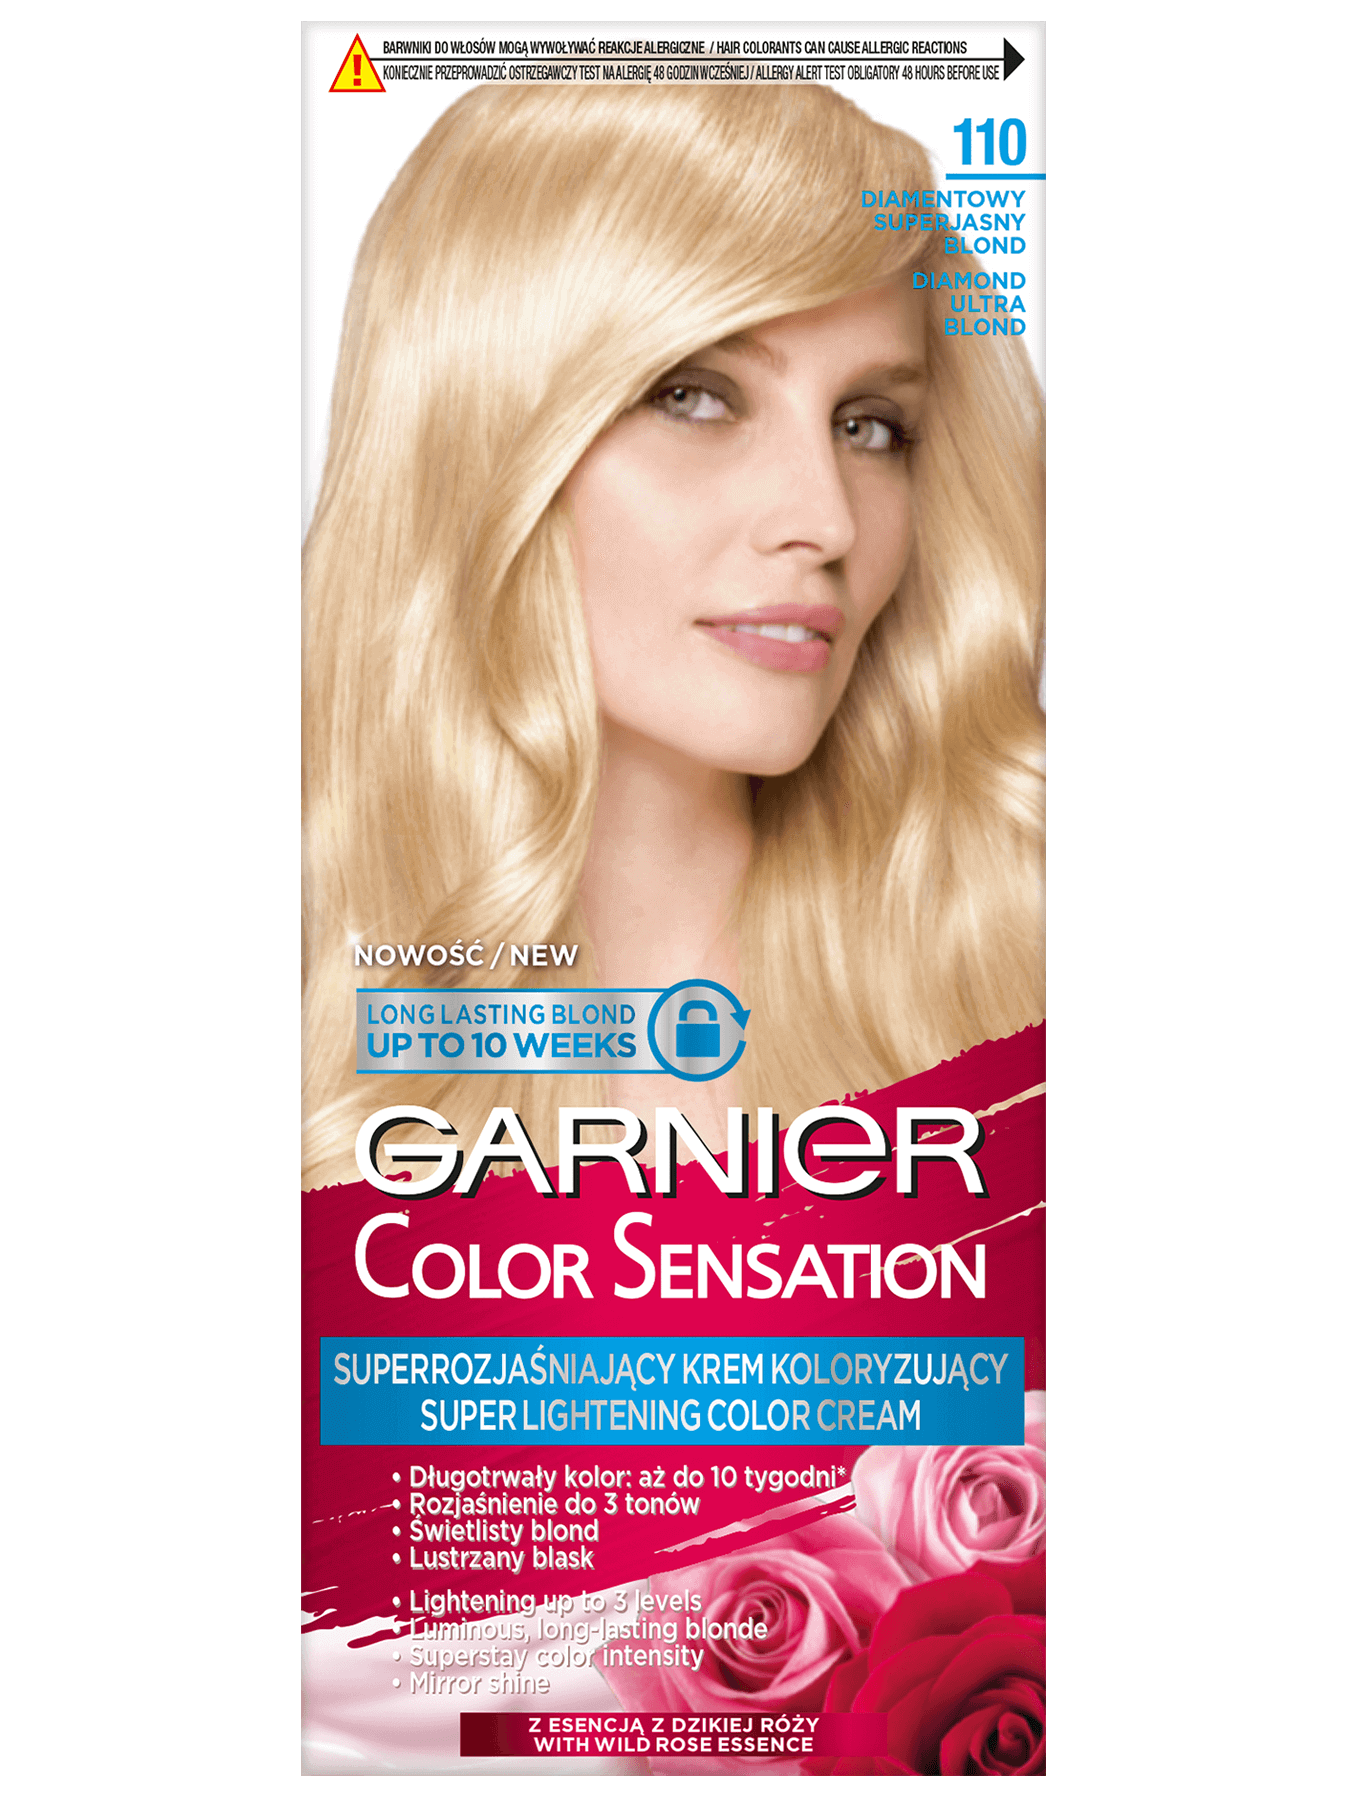 garnier color sensation 1 1 0 diamentowy blond 1350x1800